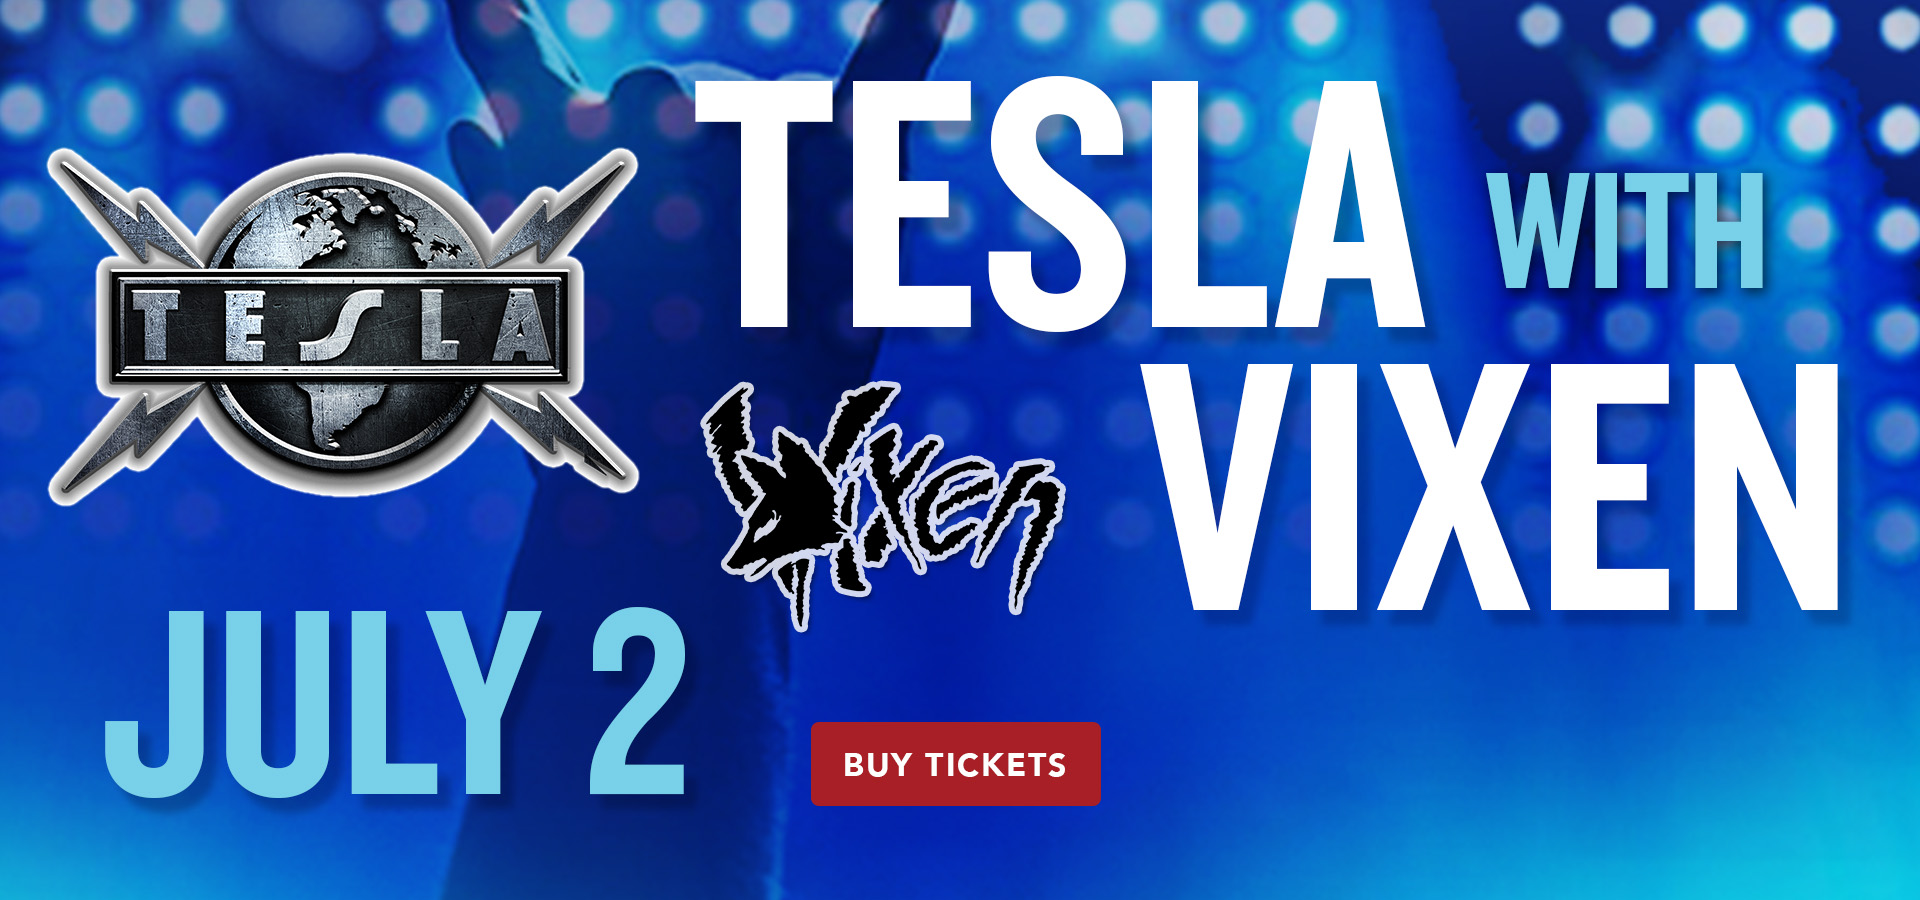 Tesla with Vixen